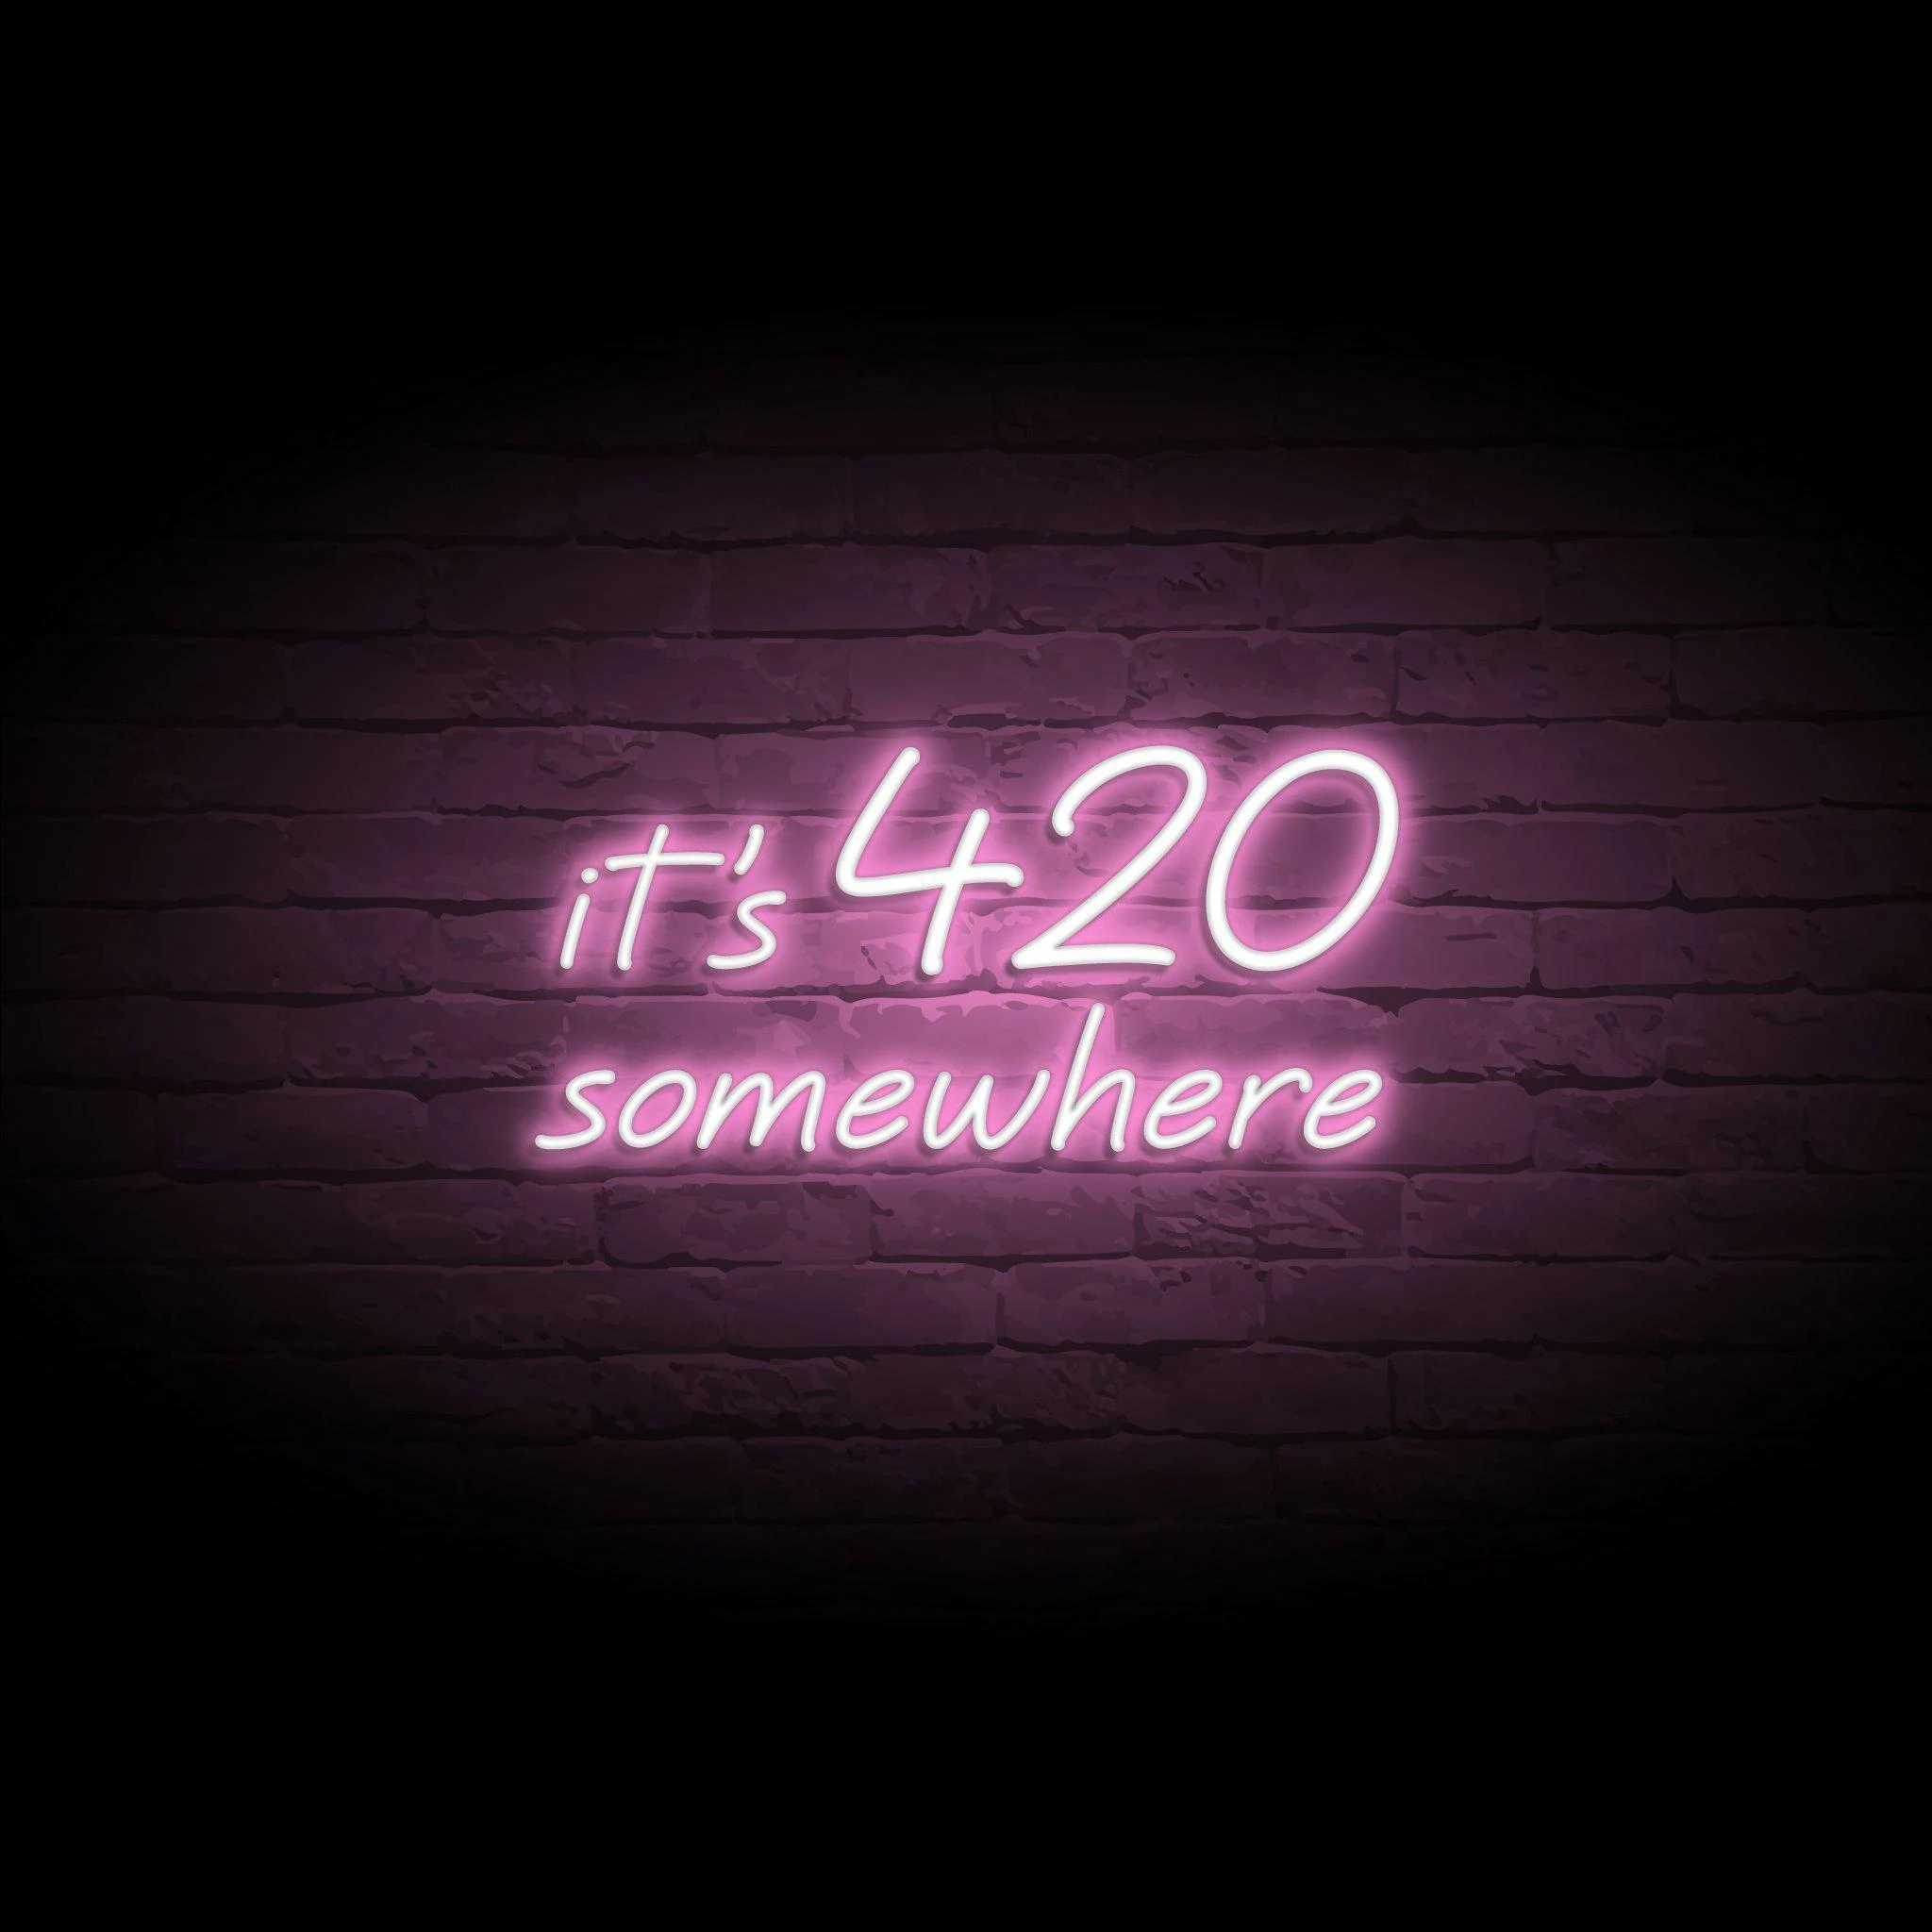 'IT'S 420 SOMEWHERE' NEON SIGN